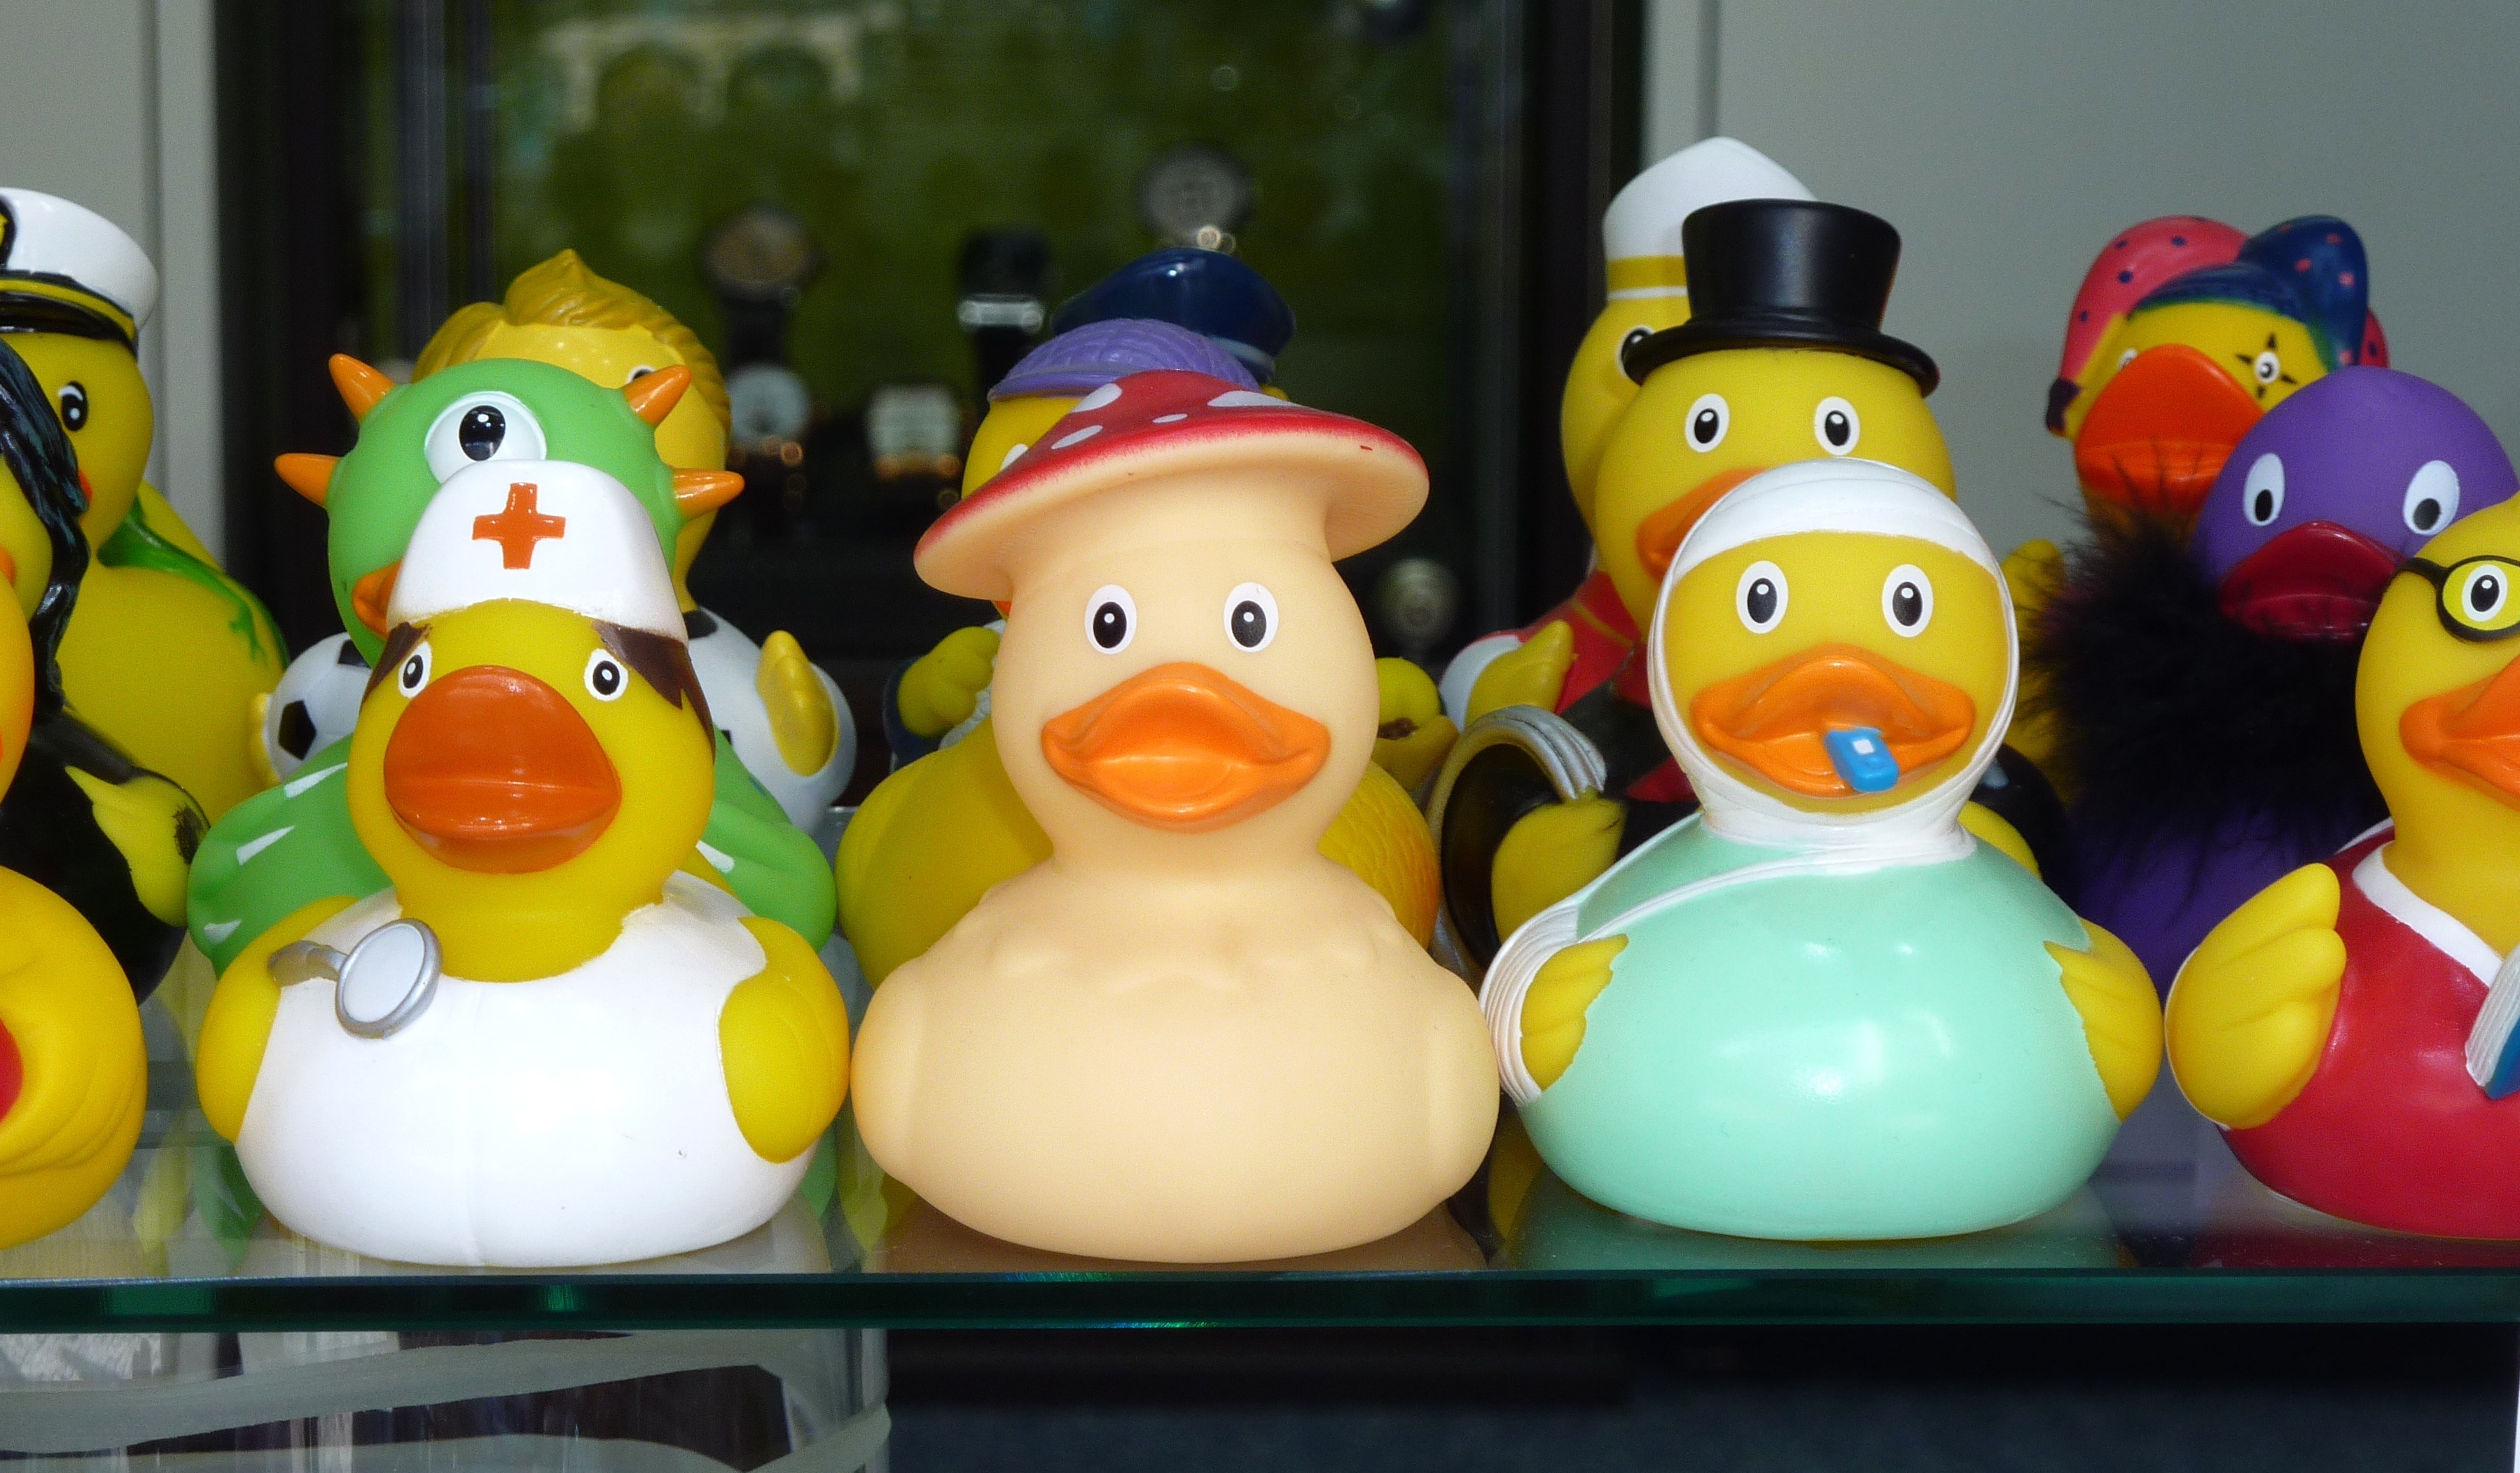 assorted rubber duckies